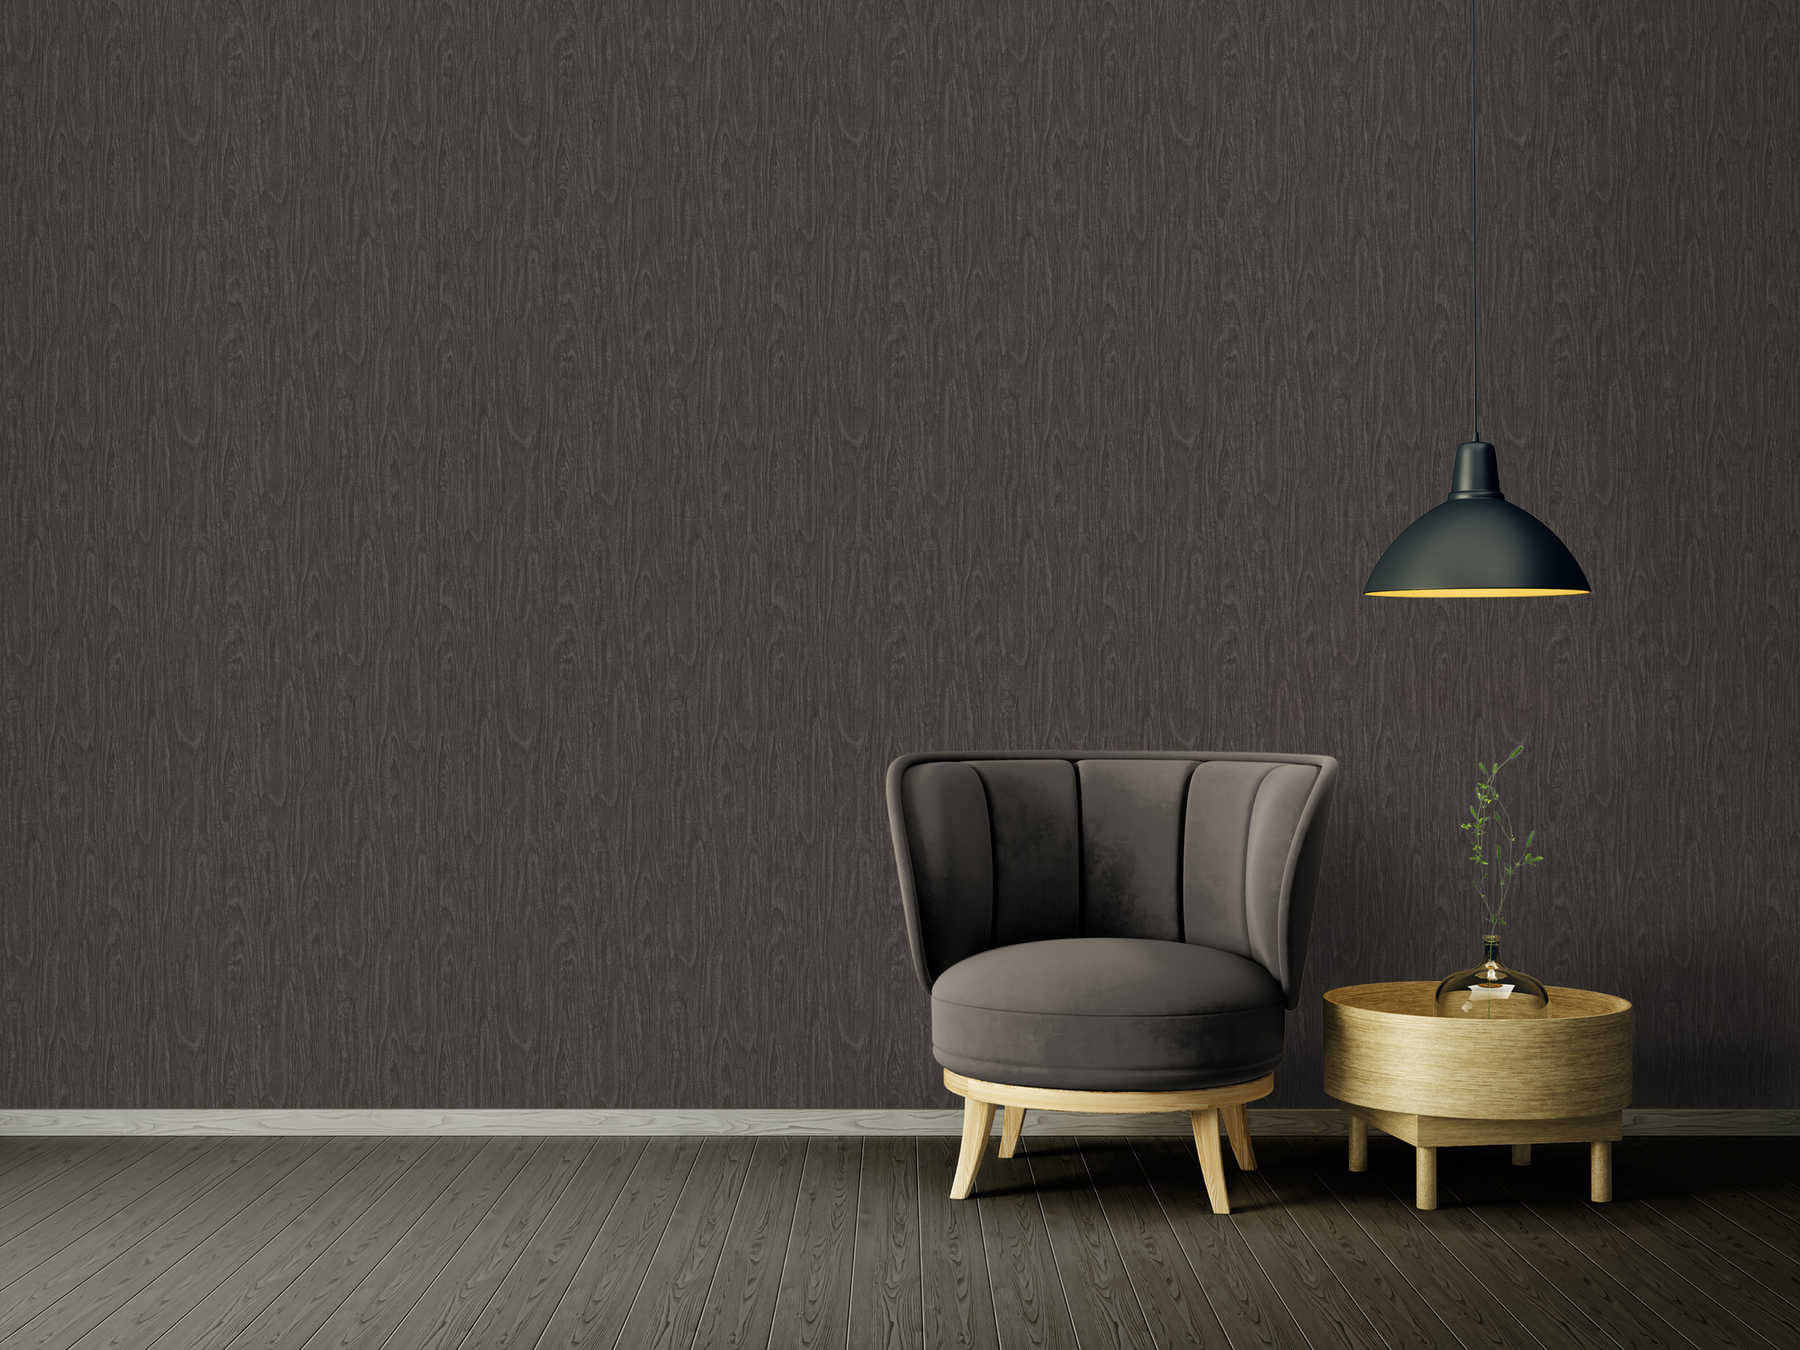             VERSACE Home wallpaper realistic wood look - grey, black
        